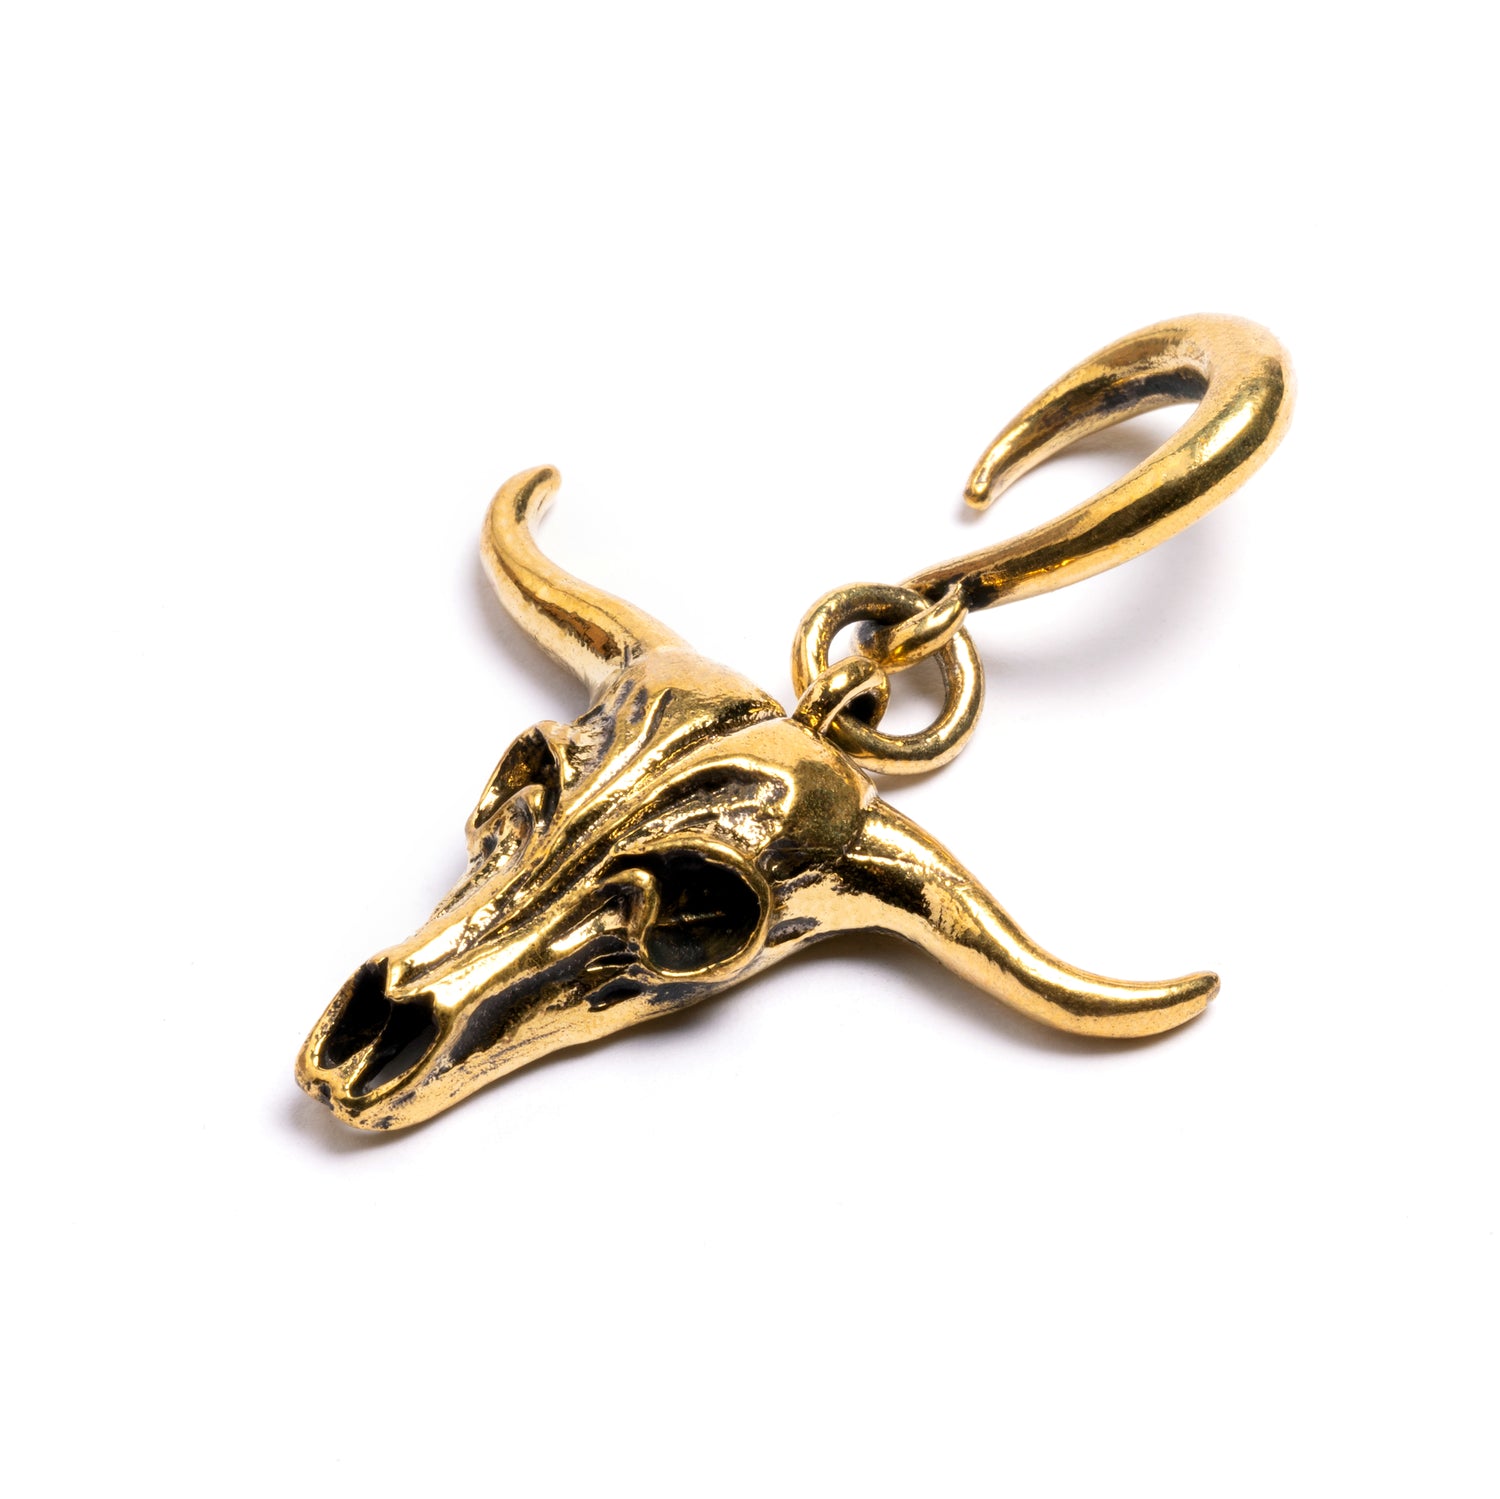 single gold brass longhorn skull ear weight hanger side close up view